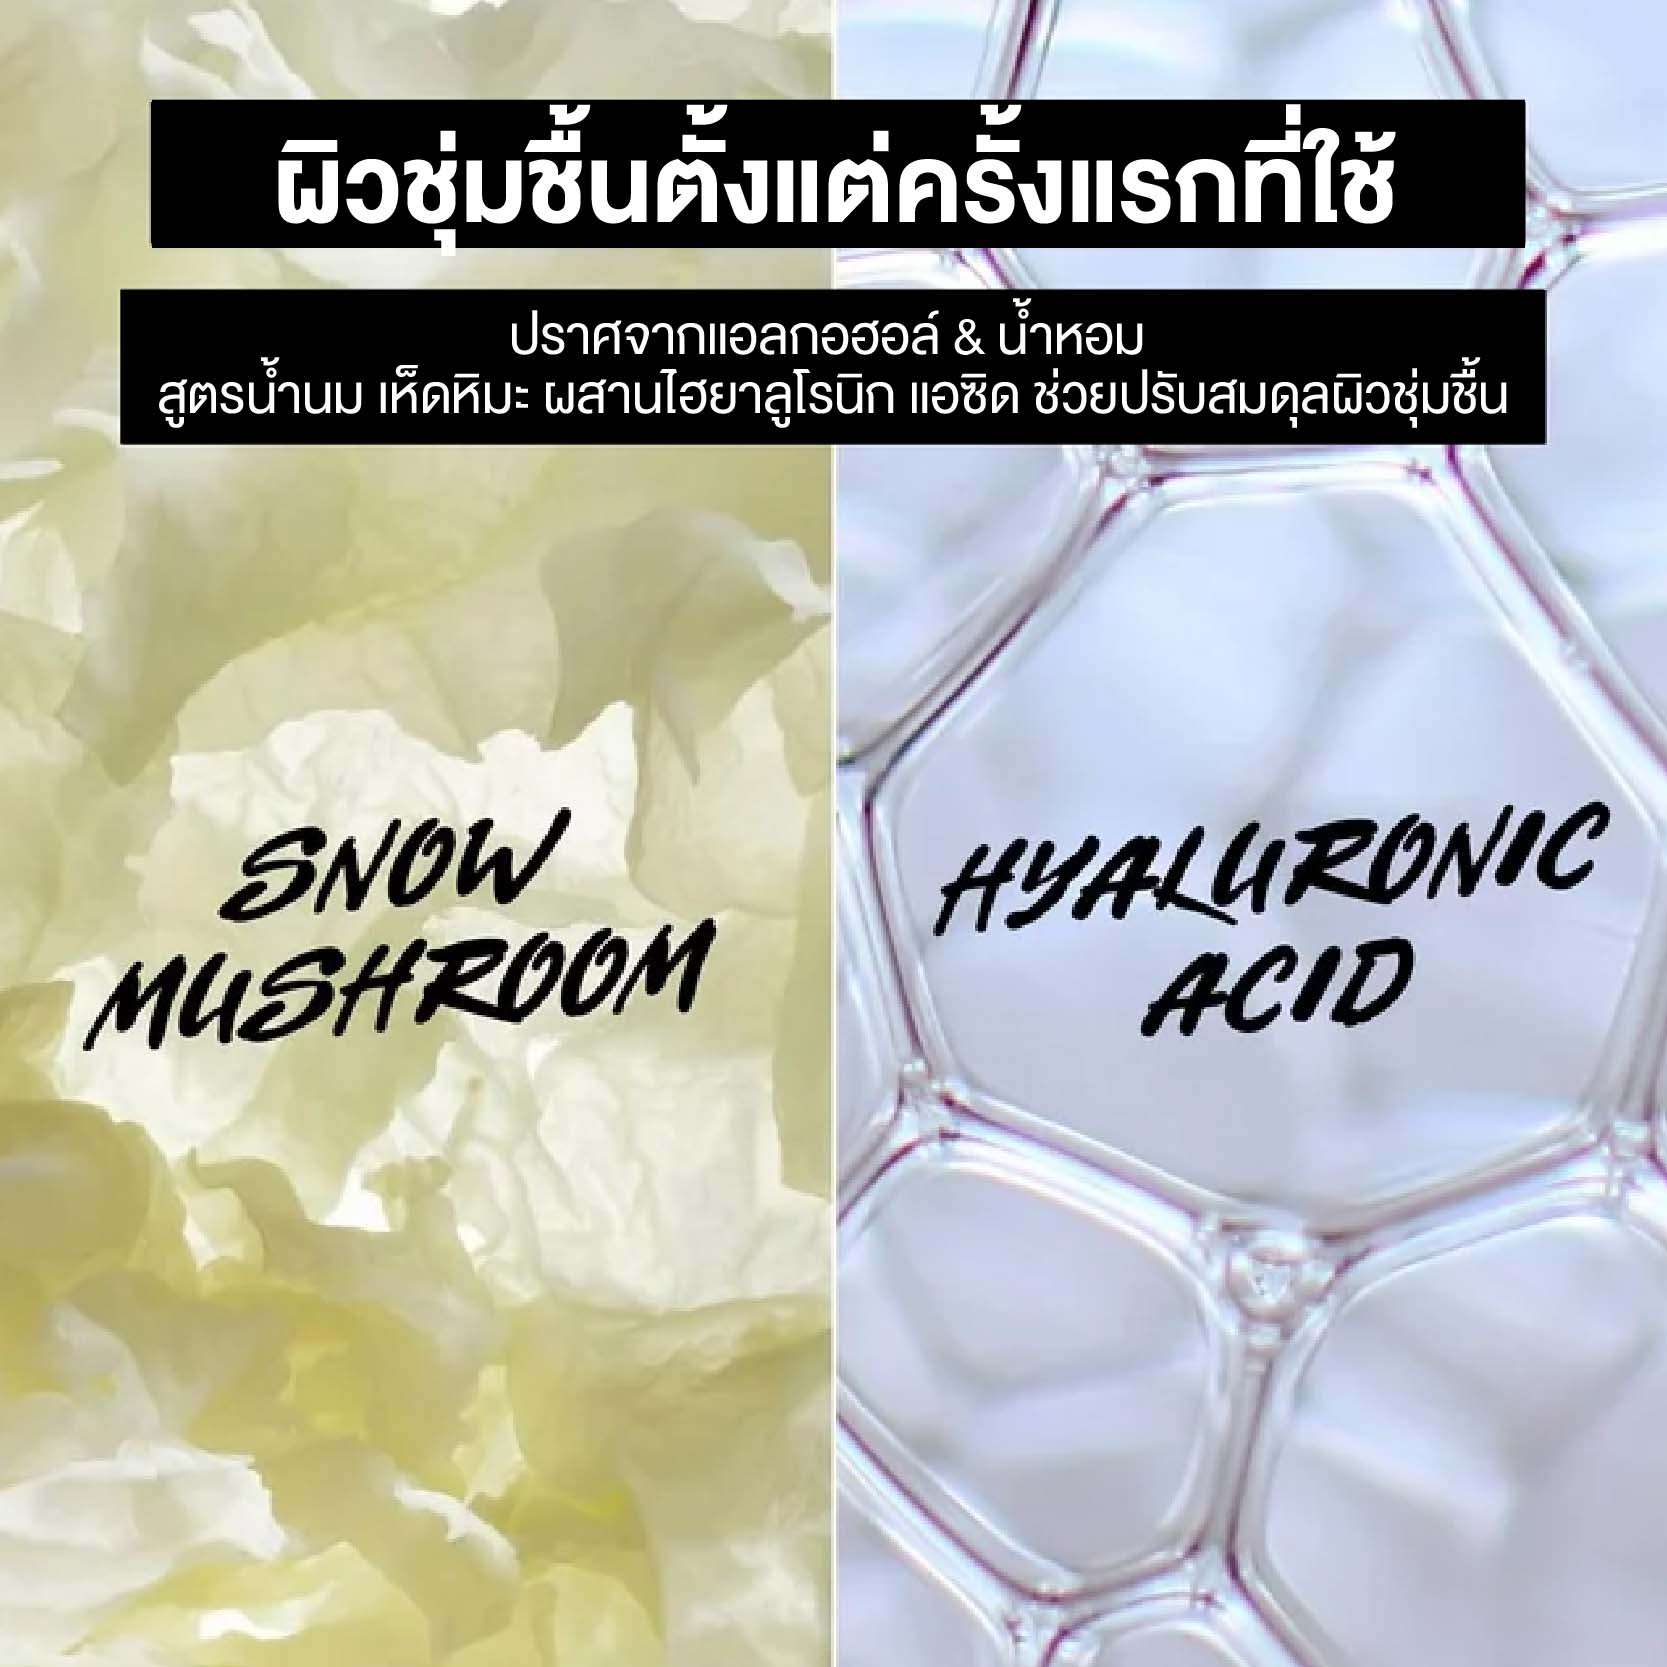 Thayers Hydrating Milky Cleanser Snow Mushroom Hyaluronic Acid 237 ml